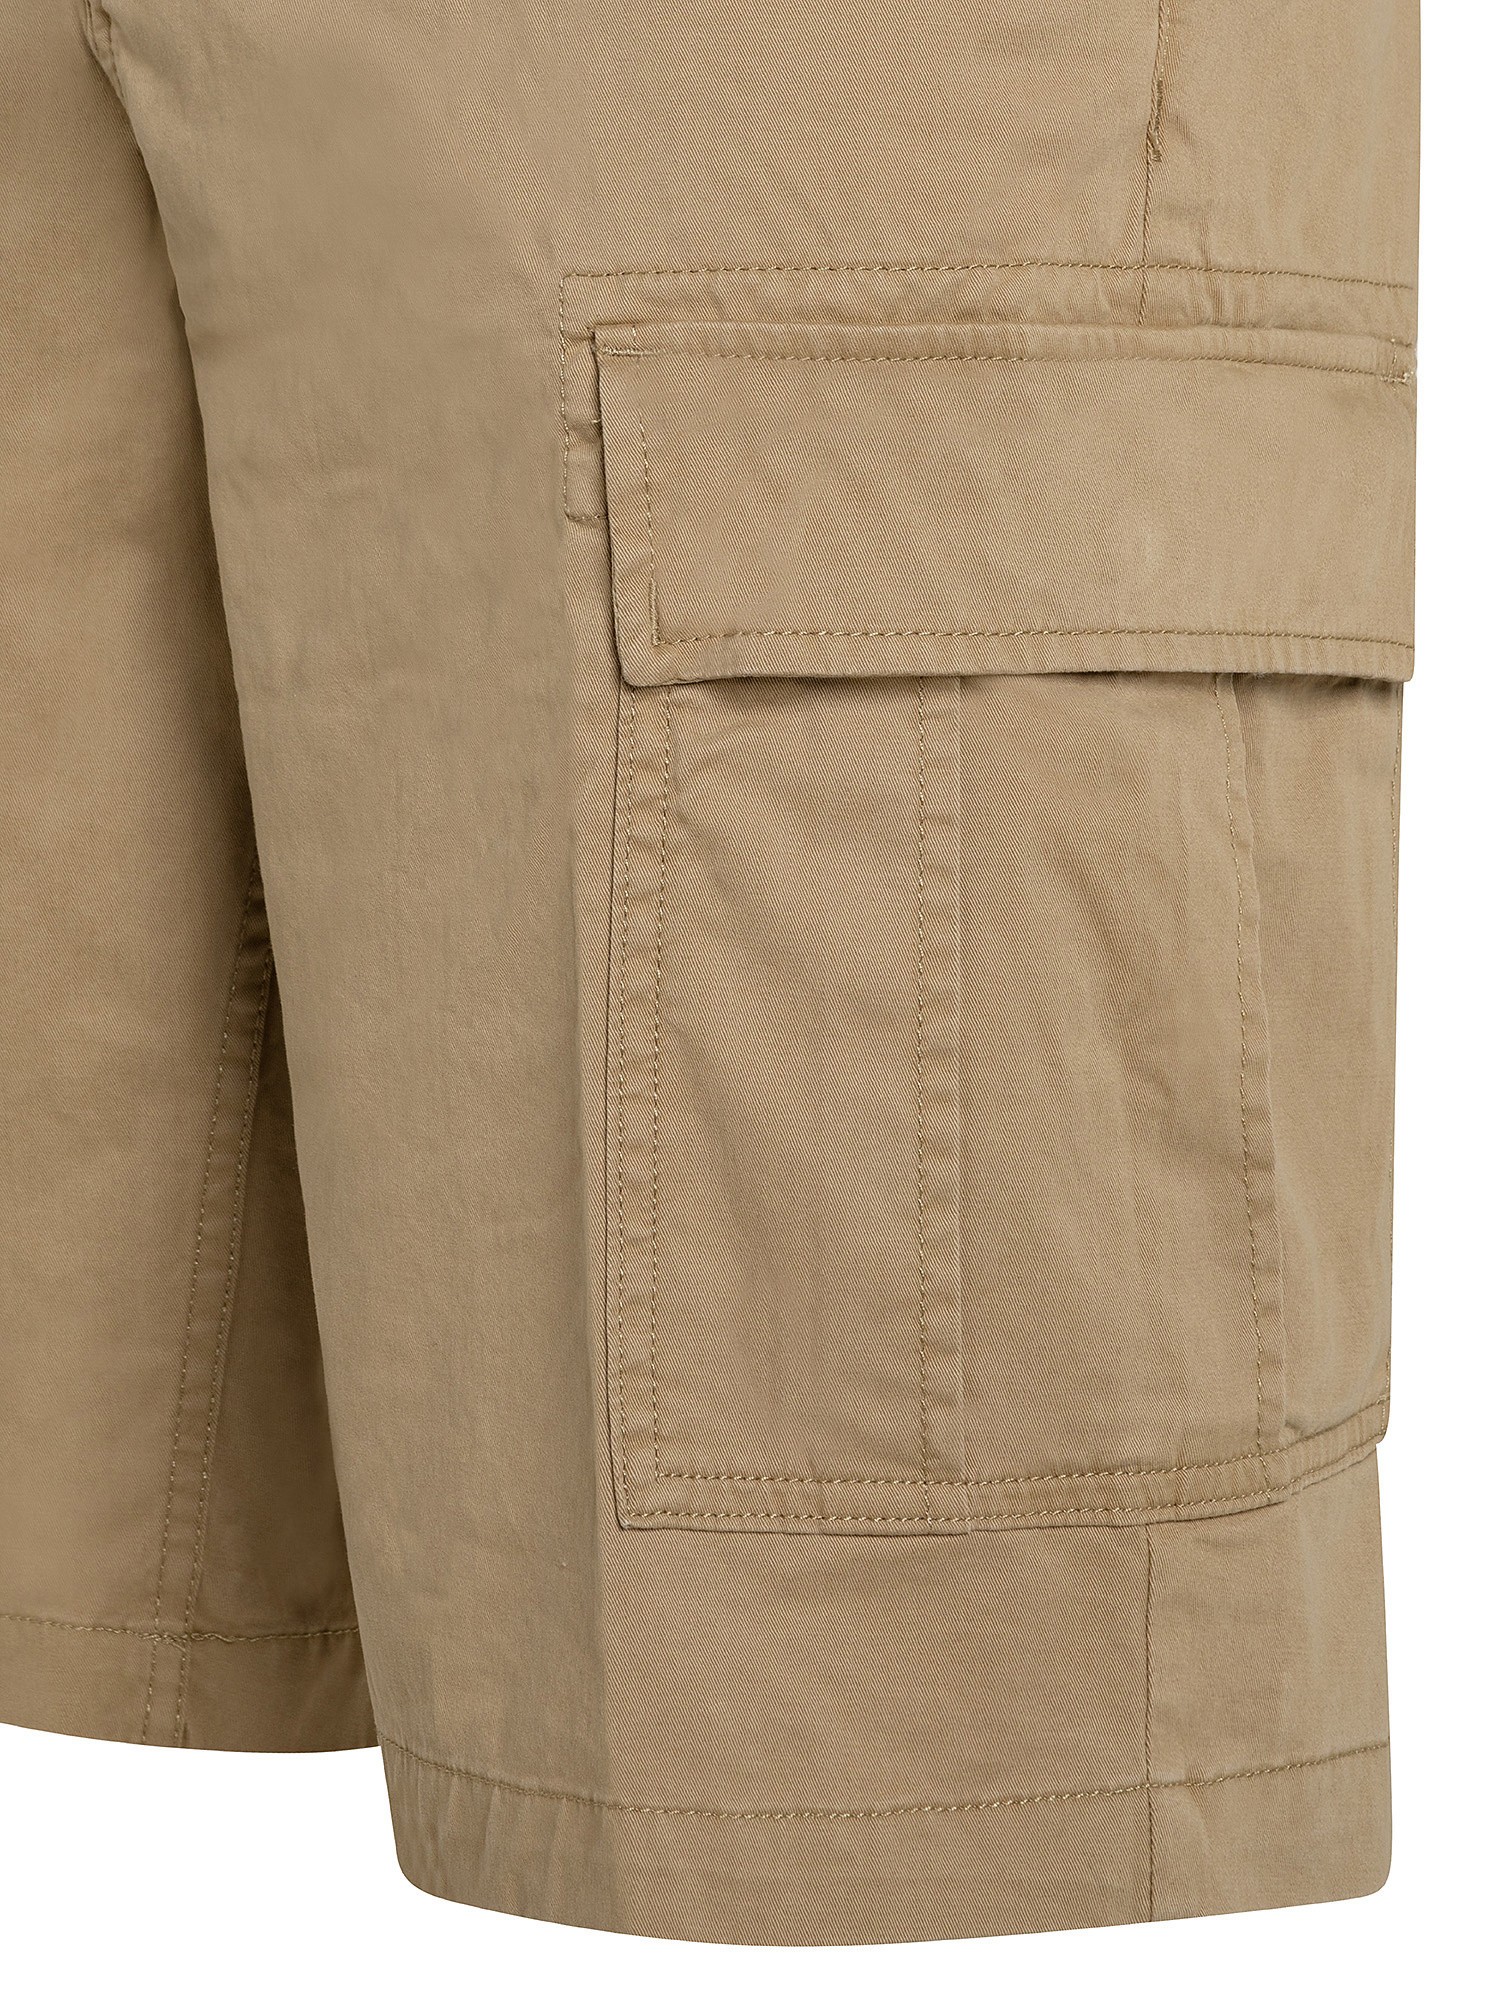 Men's Outdoor Heritage Cargo Shorts, Beige, large image number 2